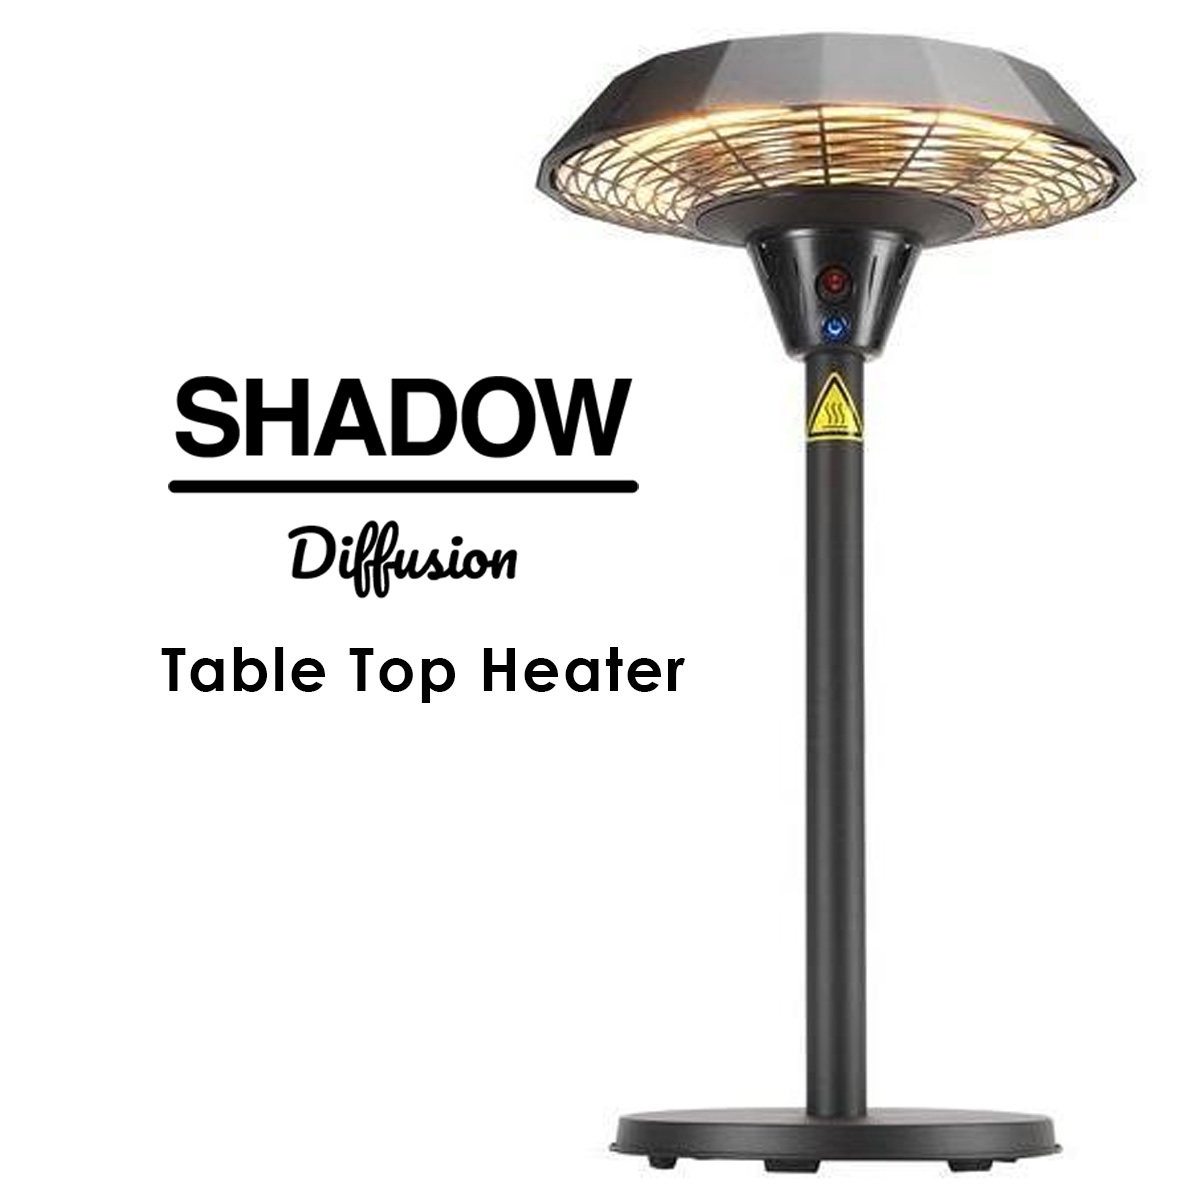 The Shadow Difusion Range - Table Top